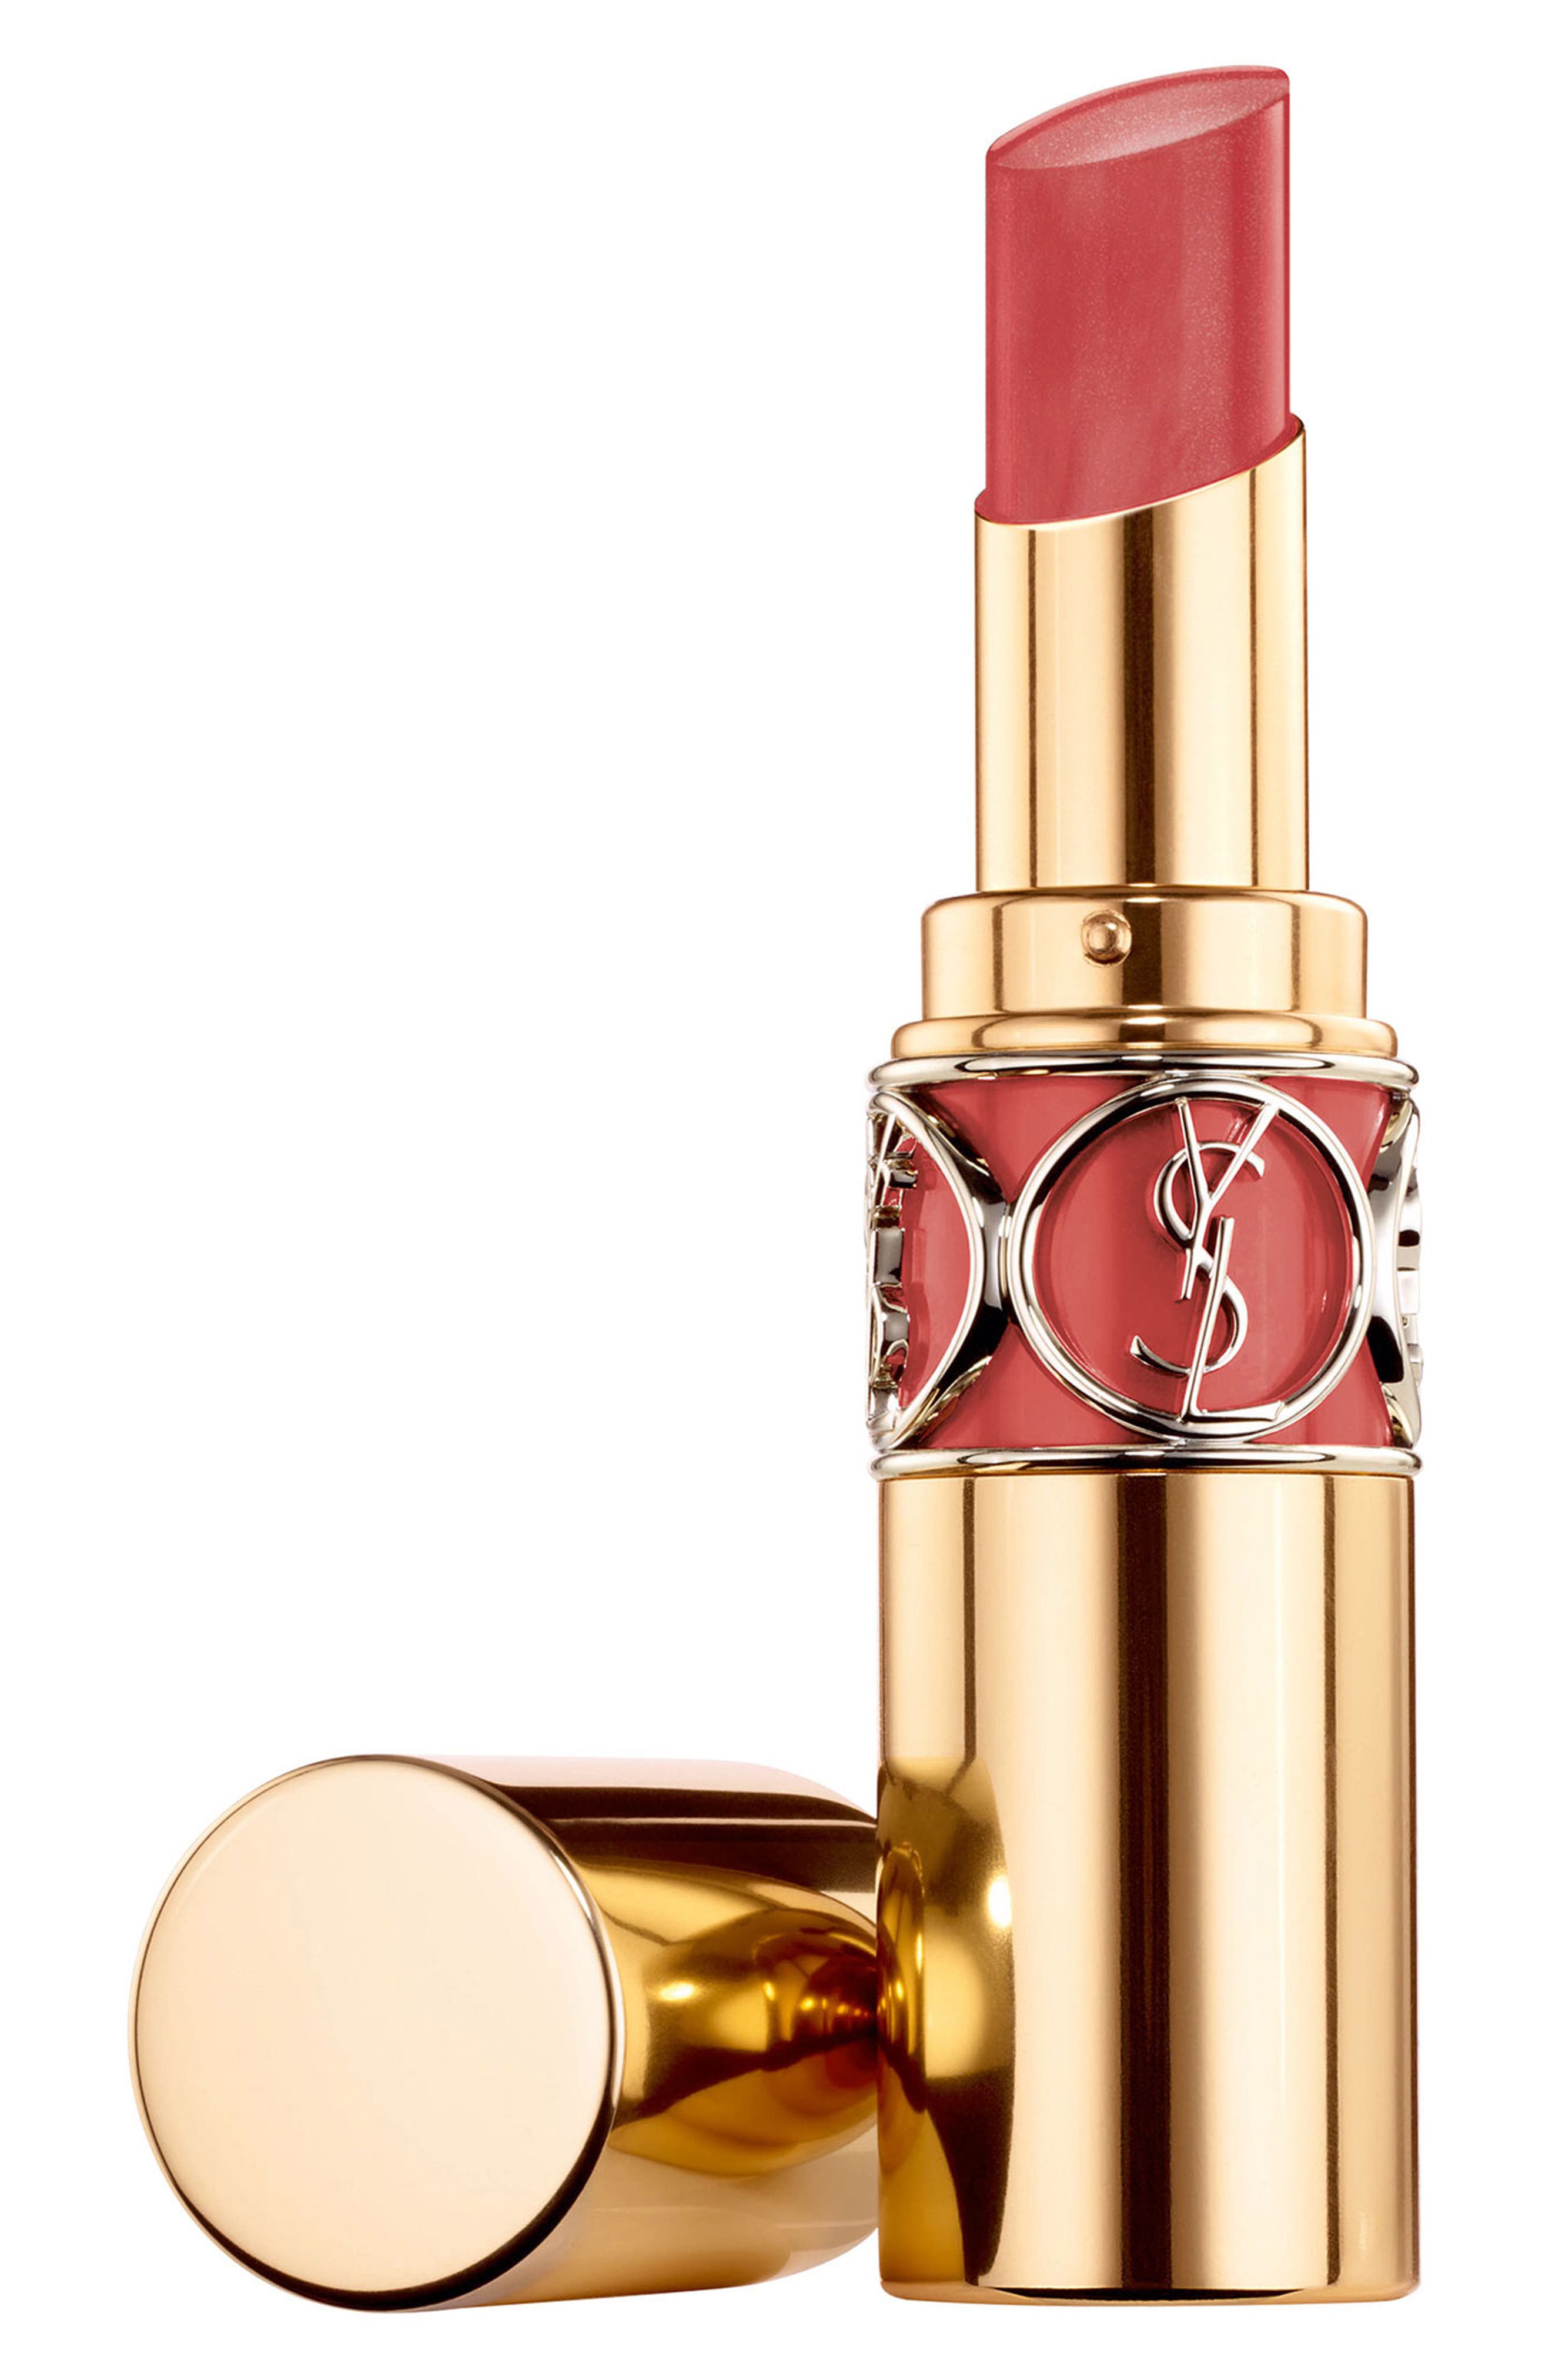 Yves Saint Laurent Rouge Volupte Shine Oil-in-Stick Lipstick Balm in 87 Rose Afrique